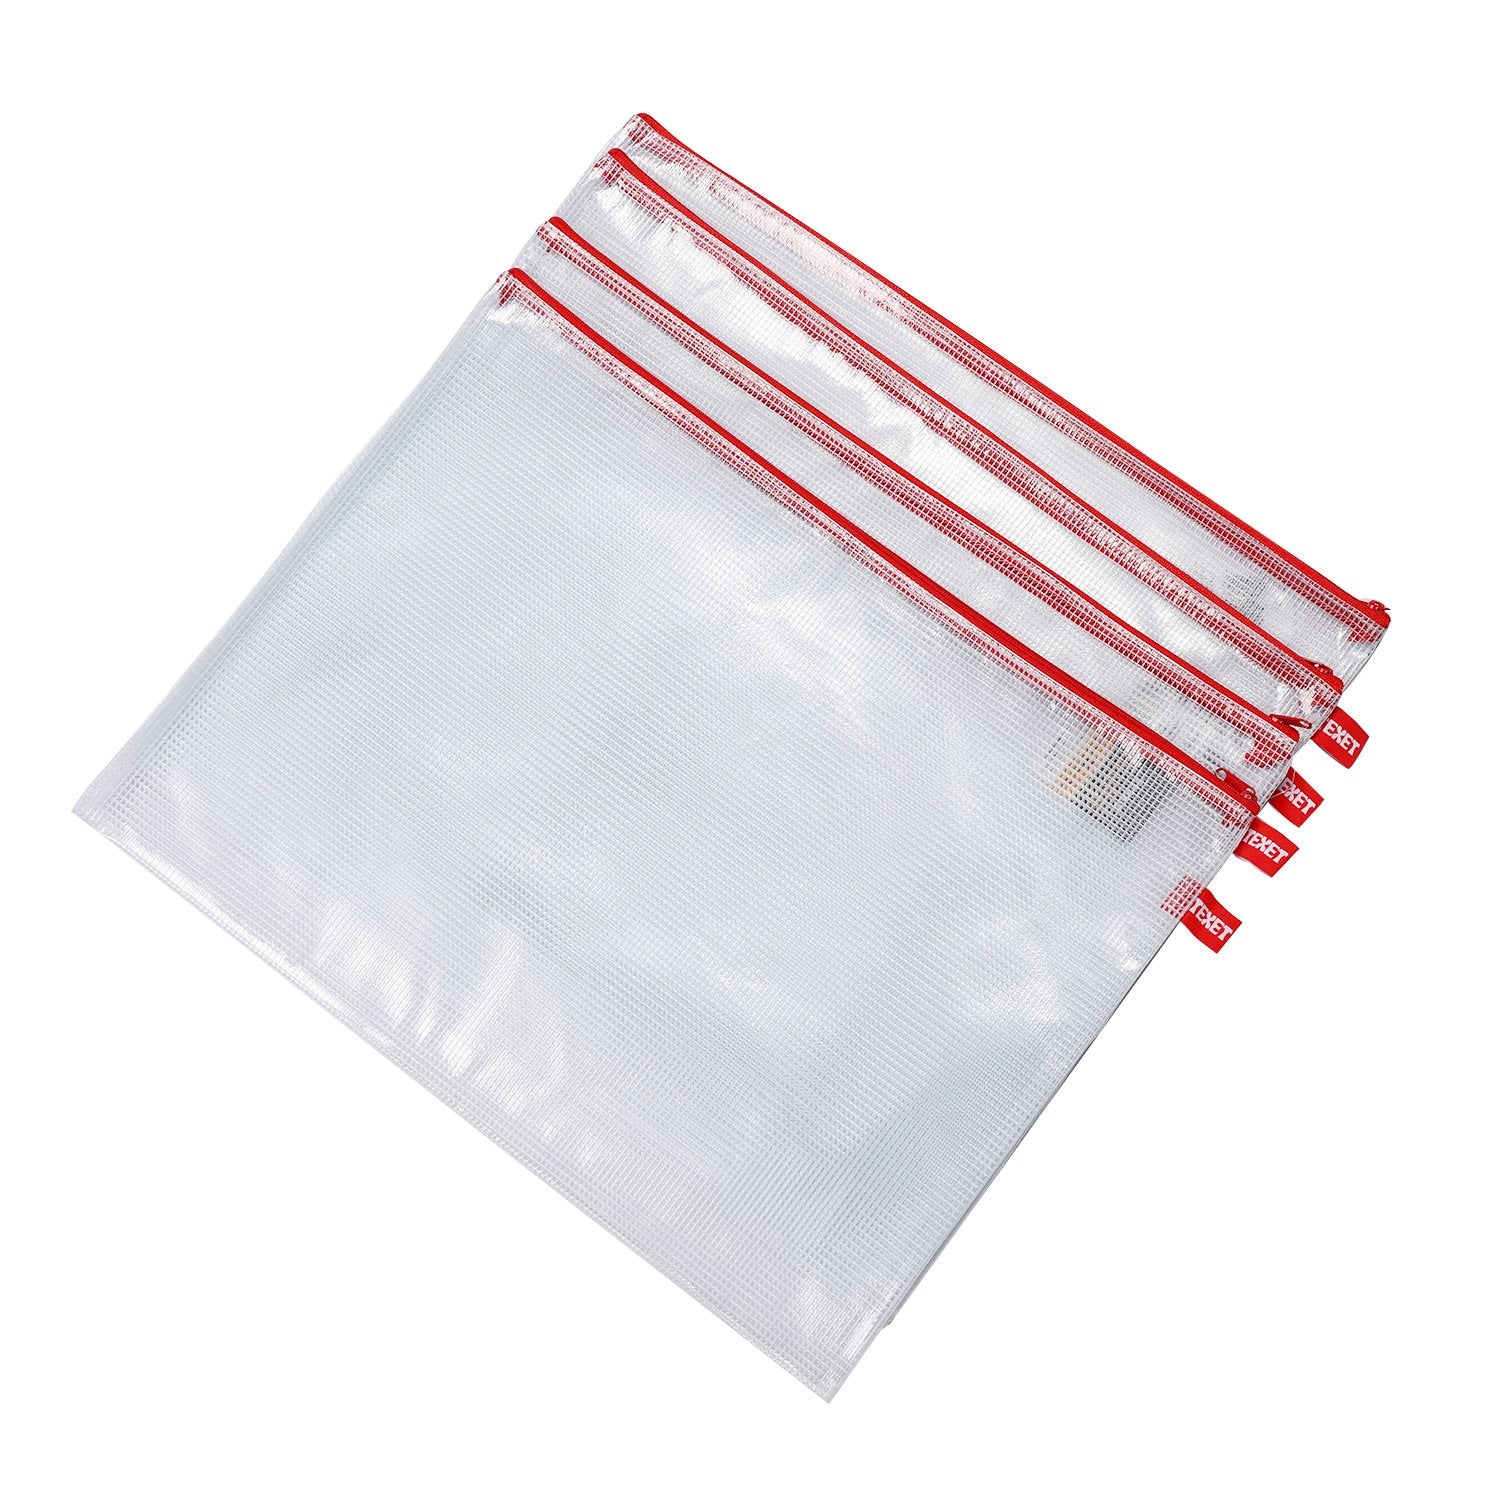 A3 Mesh Plastic Bags Assorted Colours PK12